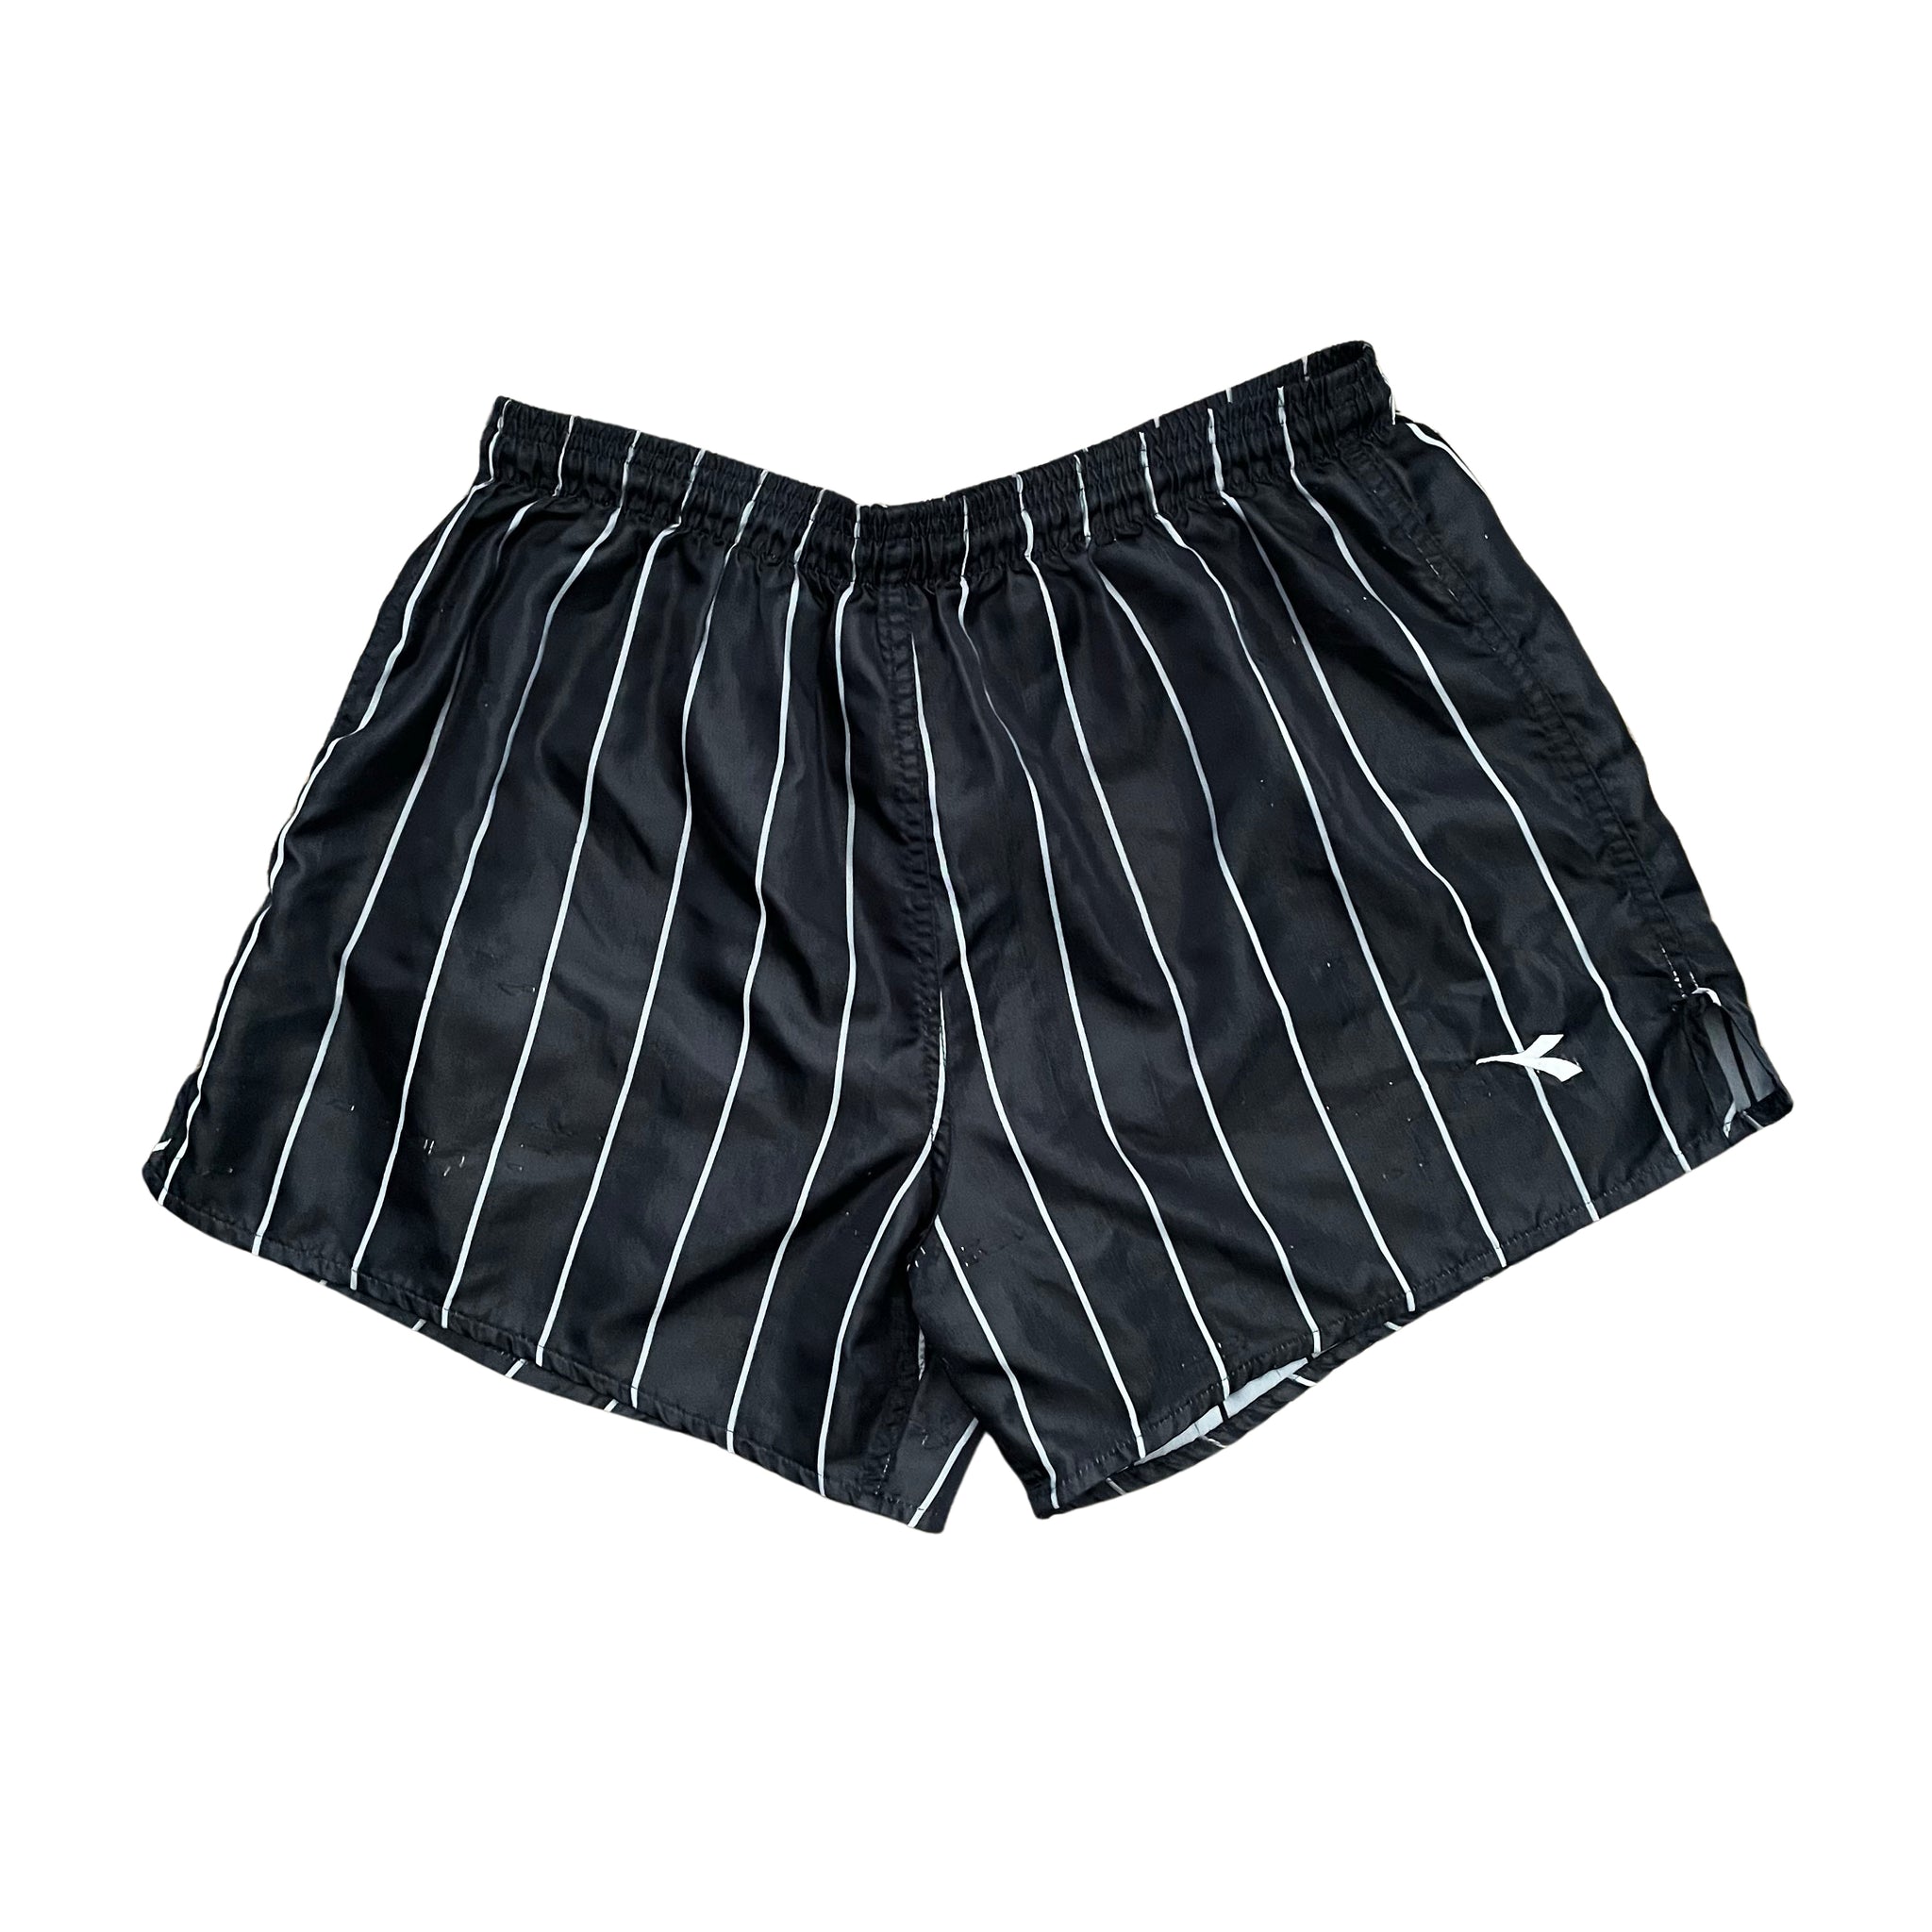 Diadora Pinstripe Shorts - L